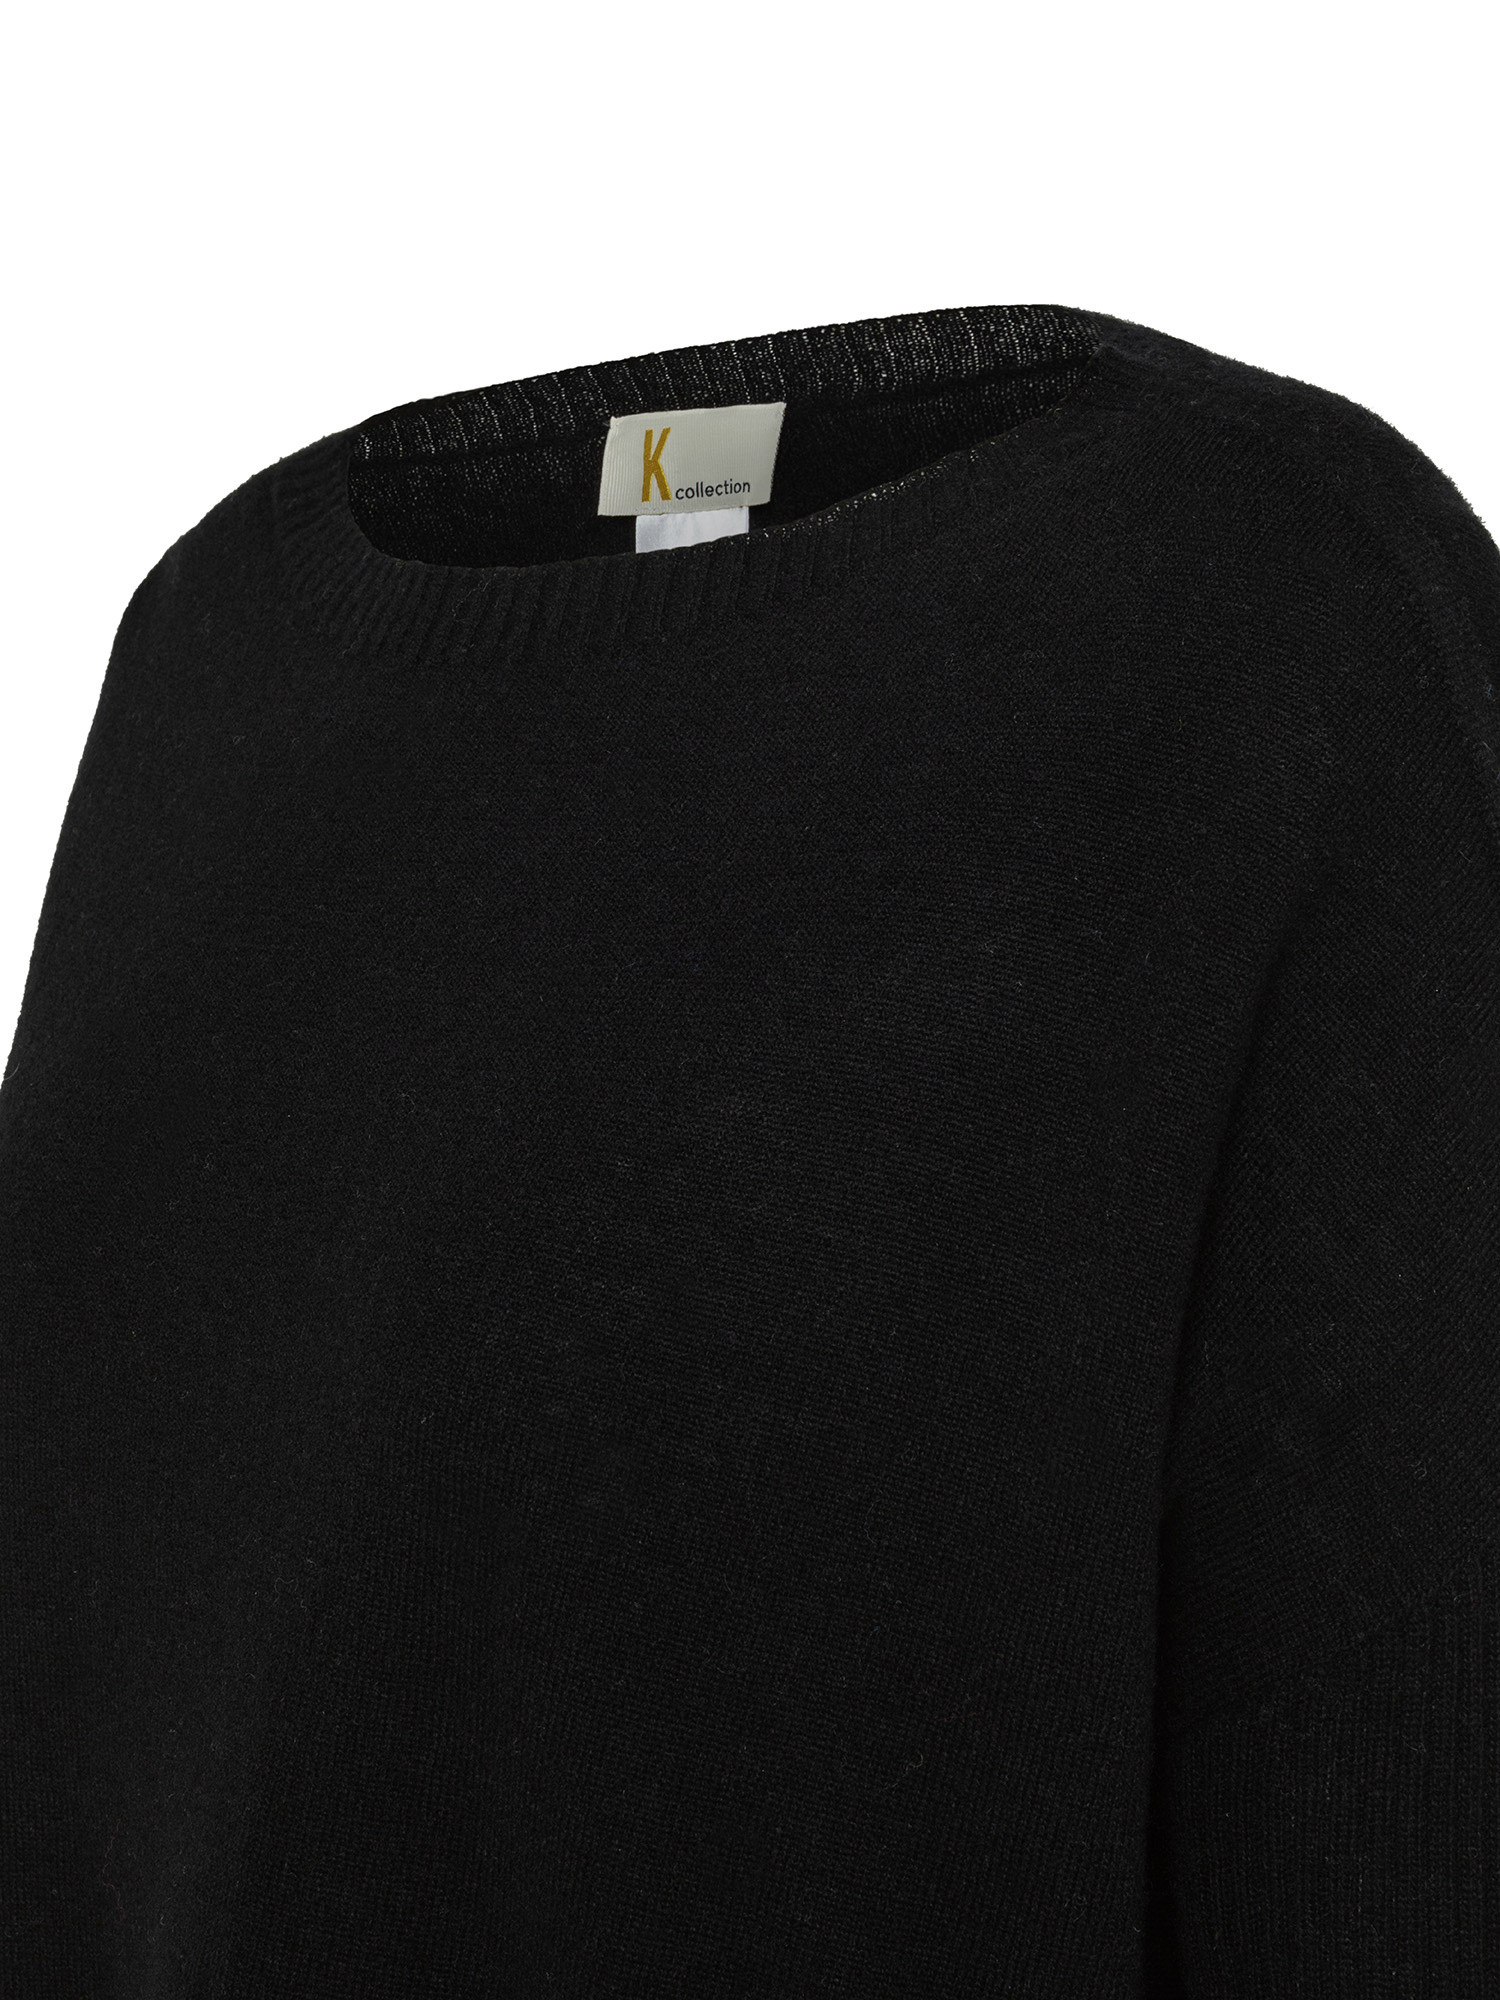 K Collection - Crewneck sweater, Black, large image number 2